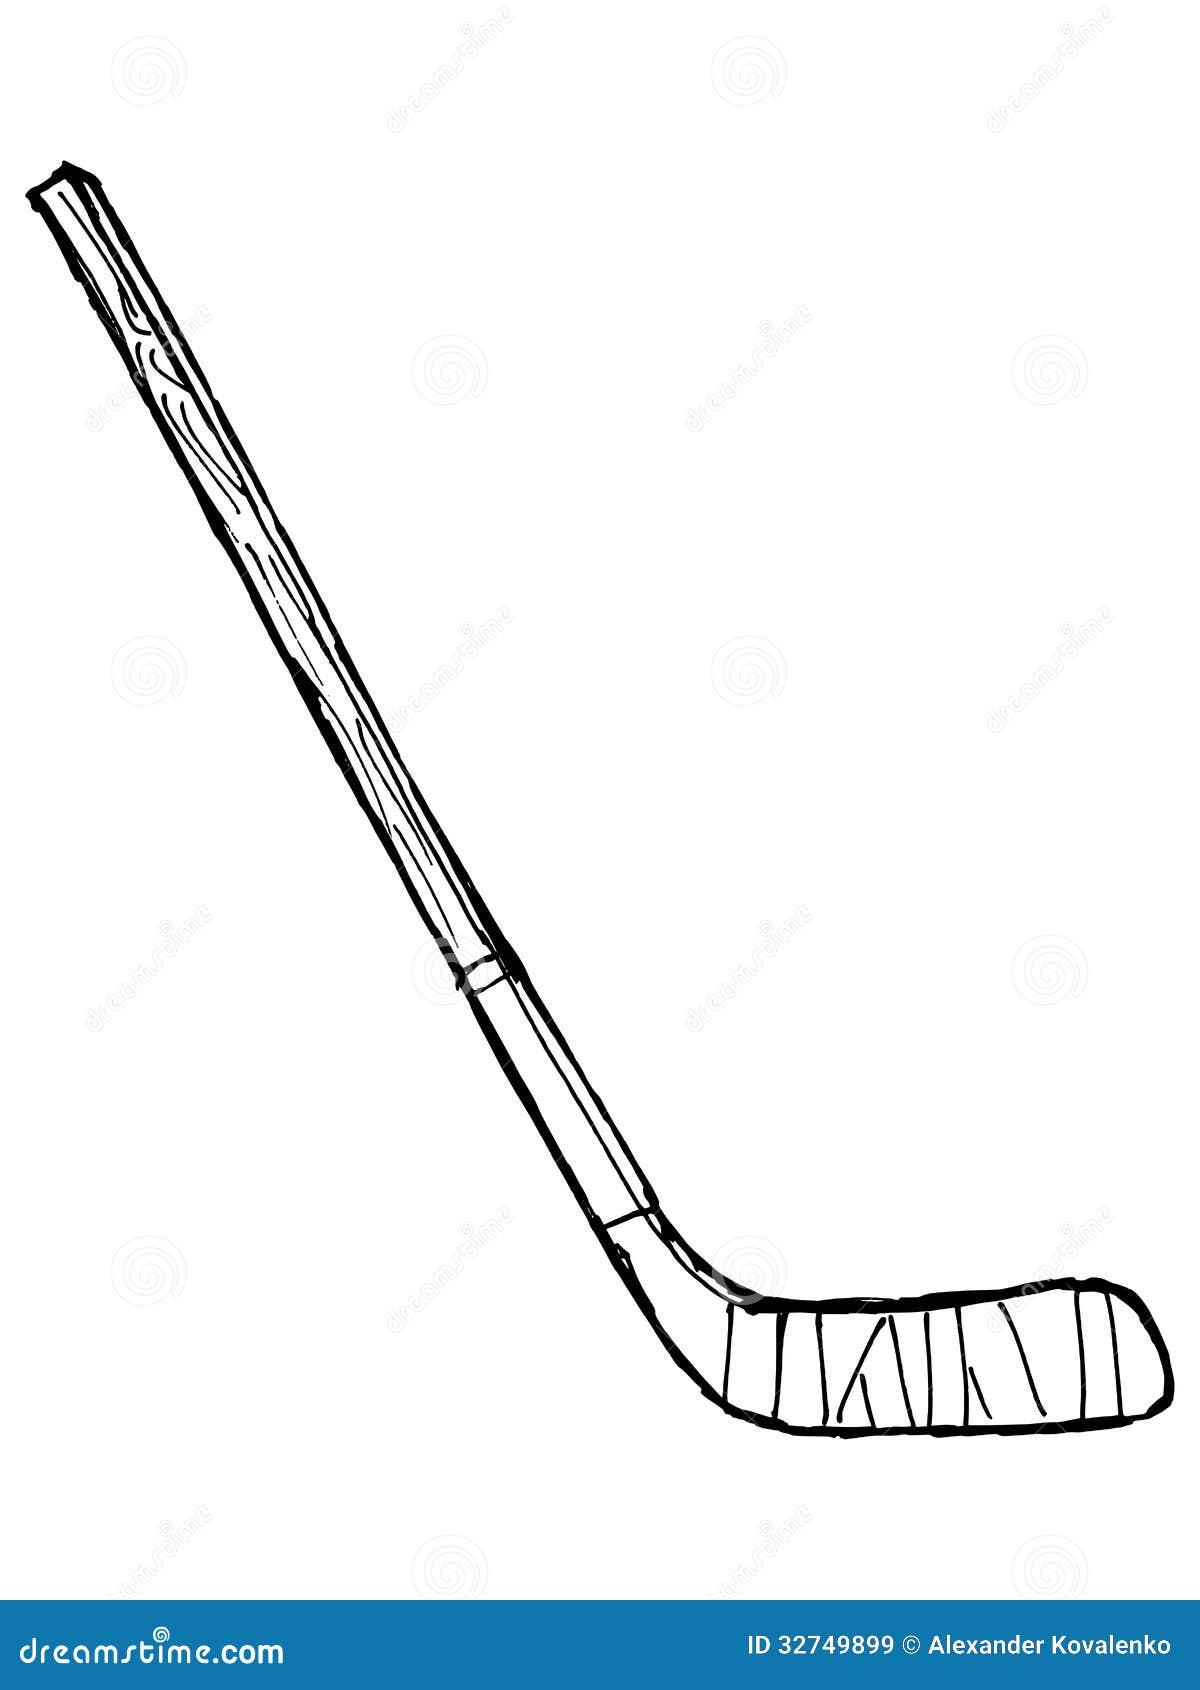 Hockey stick stock vector. Illustration of recreation ...